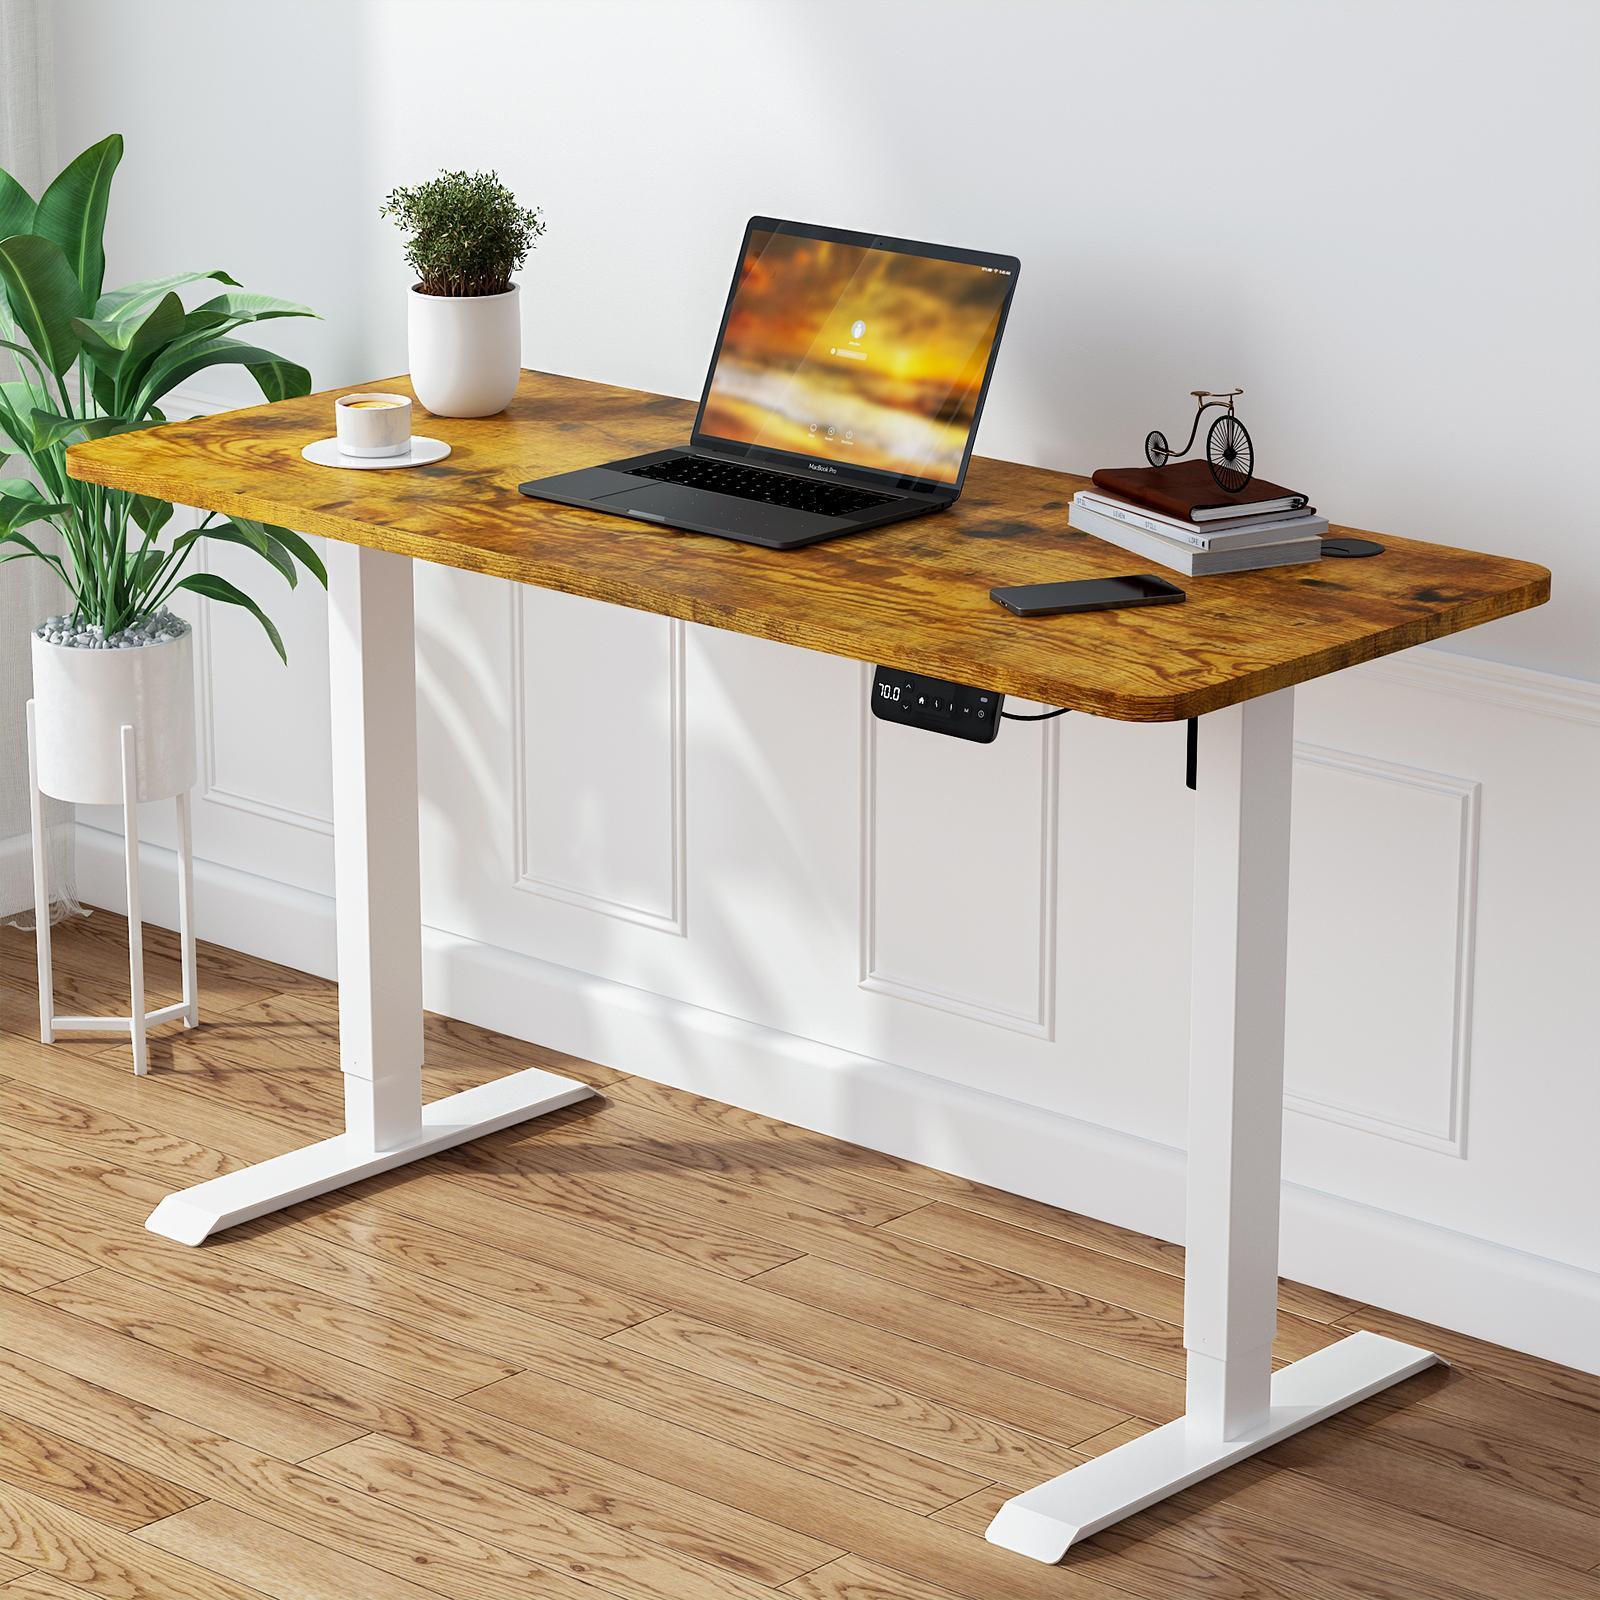 Adjustable Height Electric Standing Desk Walnut Color 140cm